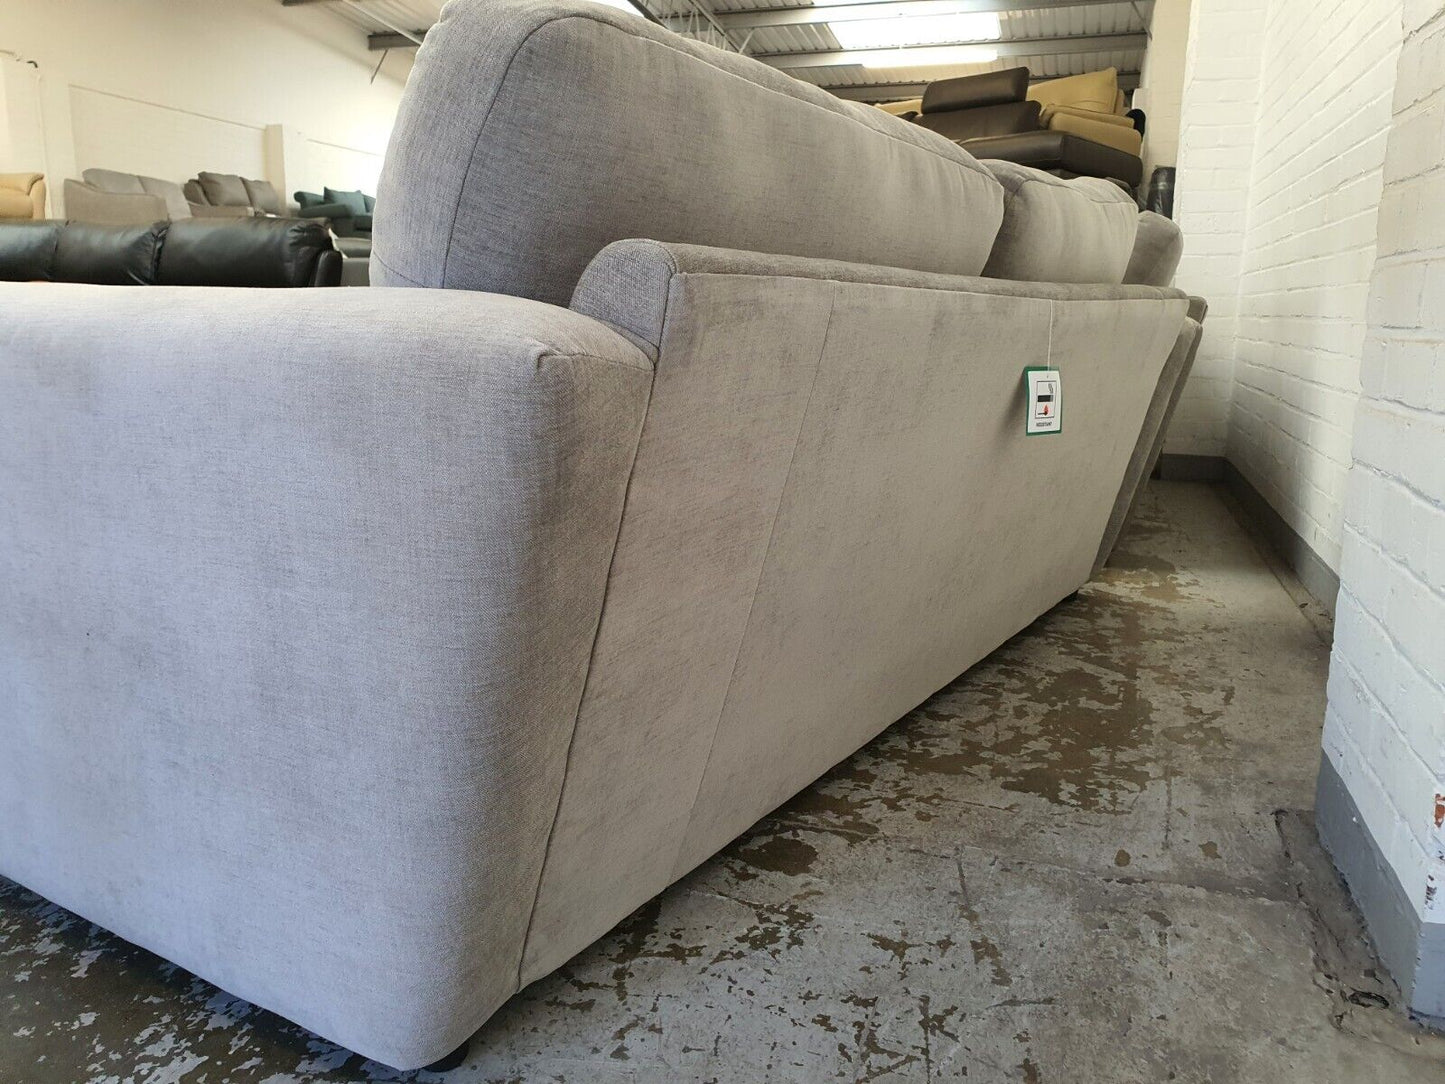 Barker & Stonehouse. Grey sofas 2 x 3 seater